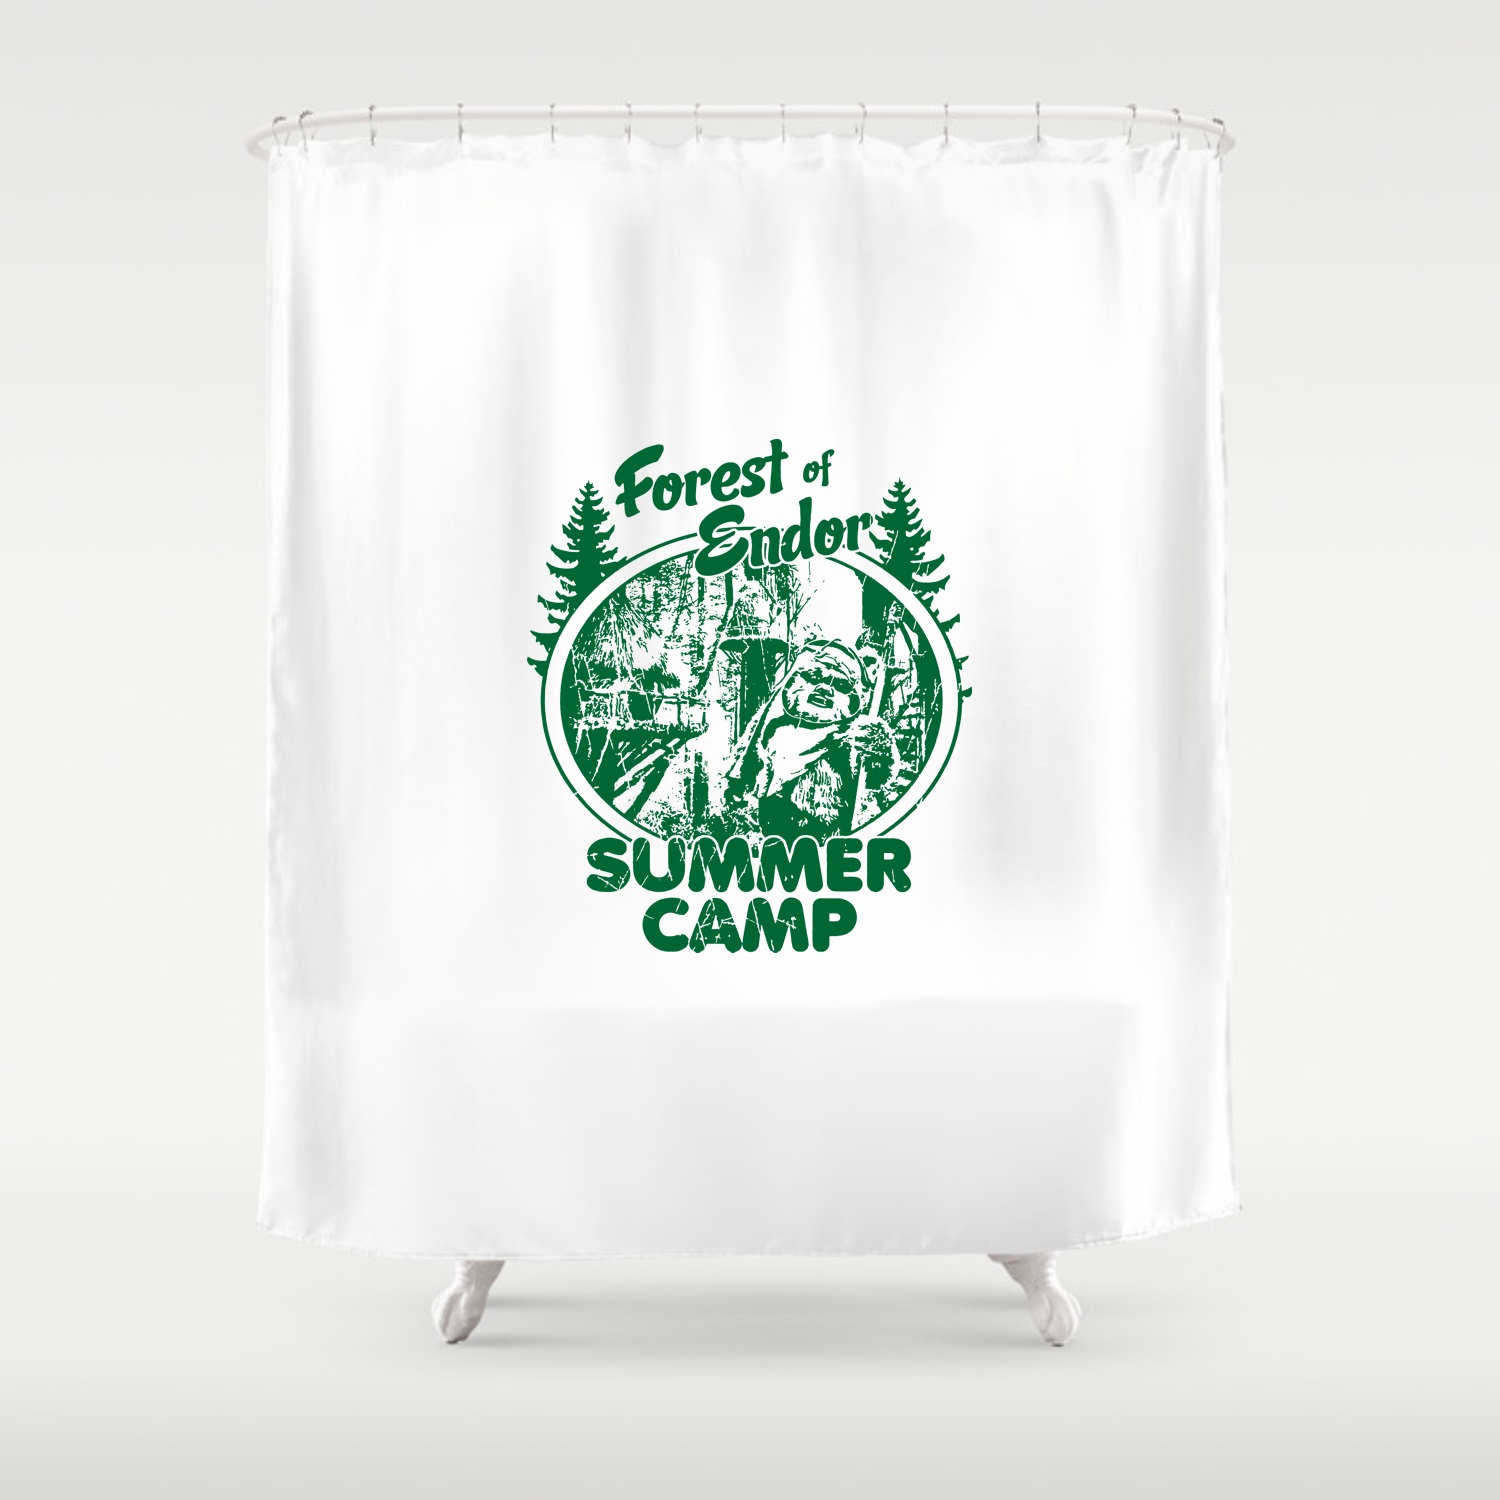 Star Wars “Endor Summer Camp” Shower Curtain White/Green